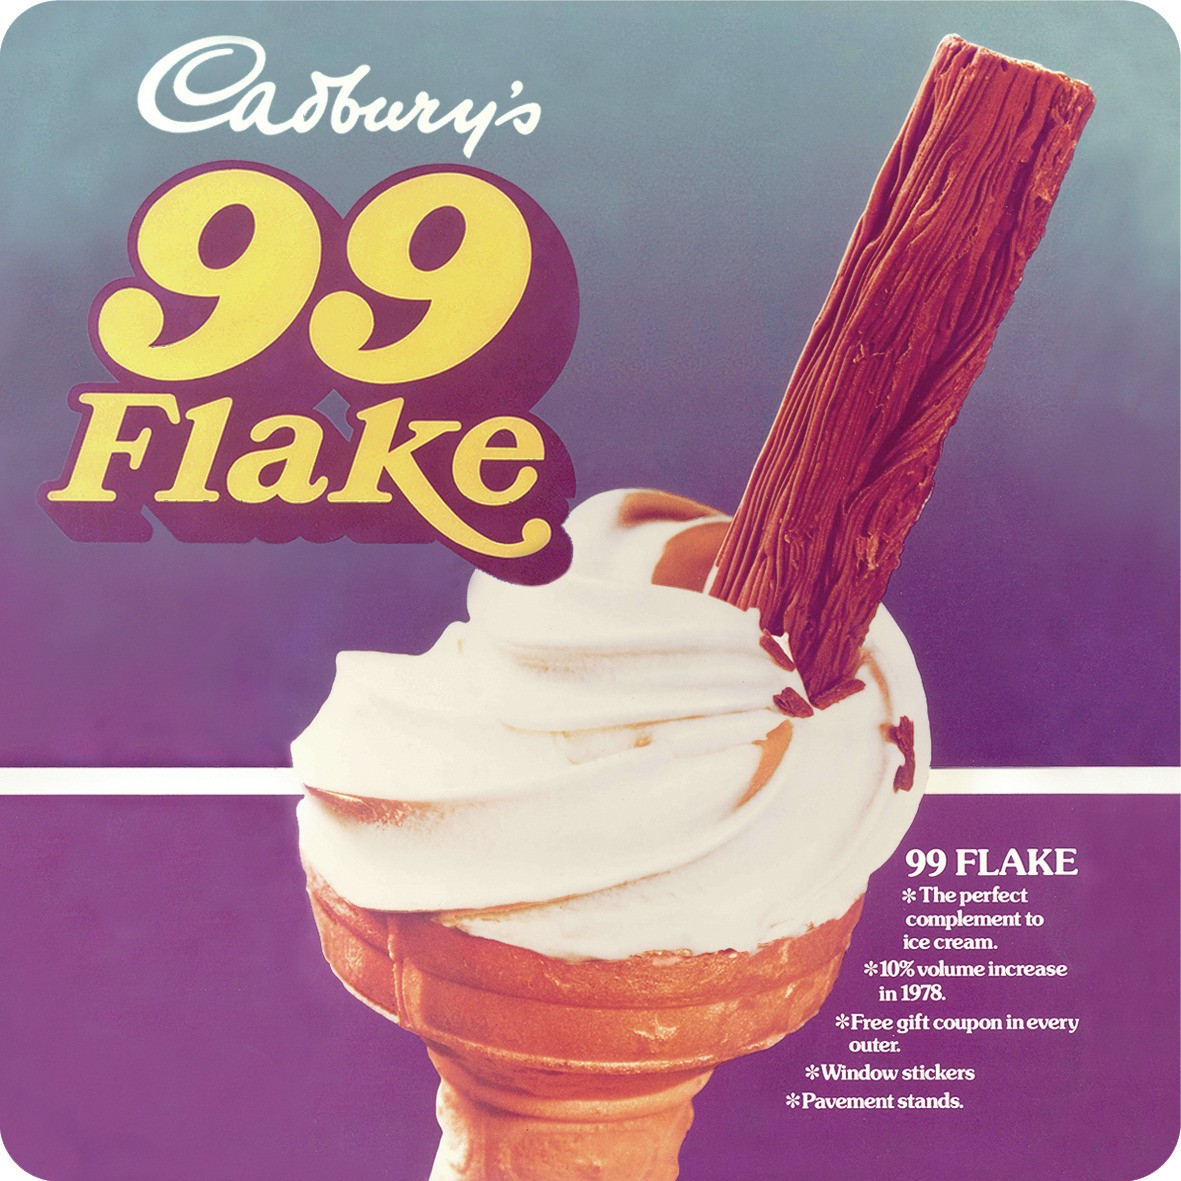 coaster-cadburys-99-Flake.jpg